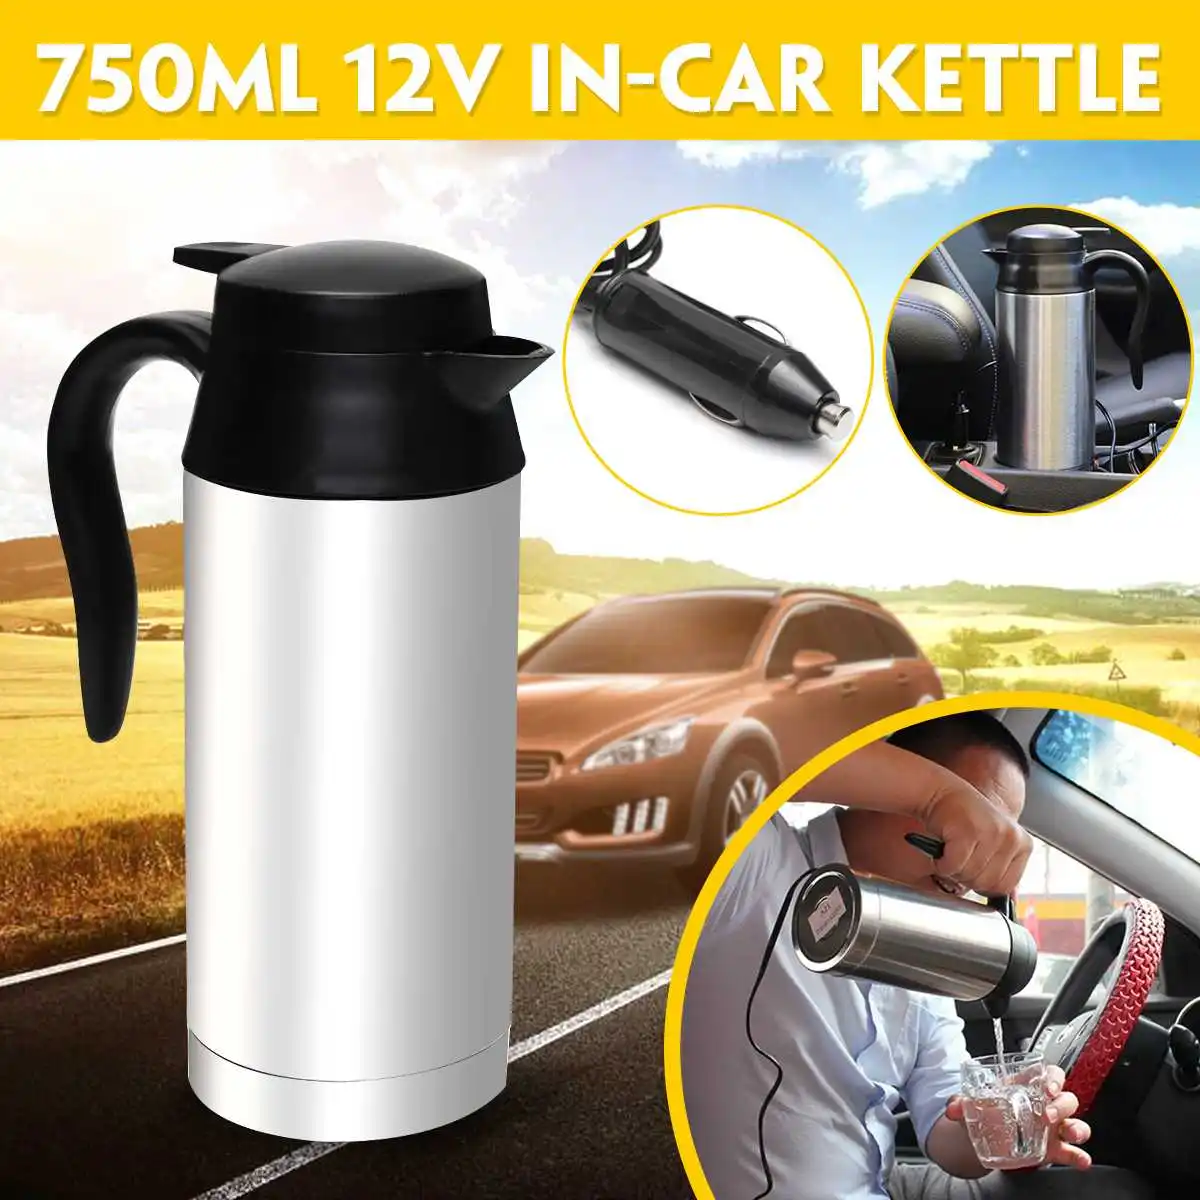 

KROAK Stainless Steel Cup Kettle 750ml 12V Car Based Heating Travel Trip Coffee Tea Heated Mug Motor Hot Water For Car/Truck Use